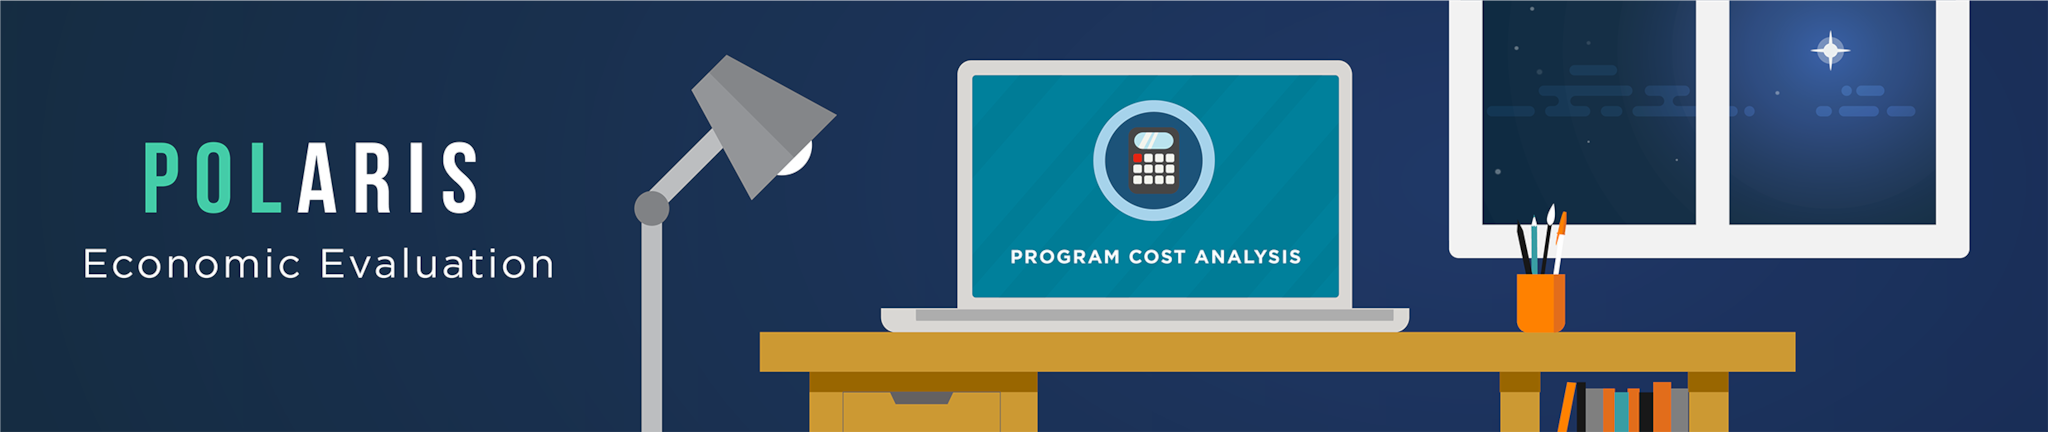 POLARIS economic evaluation Program Cost Analysis